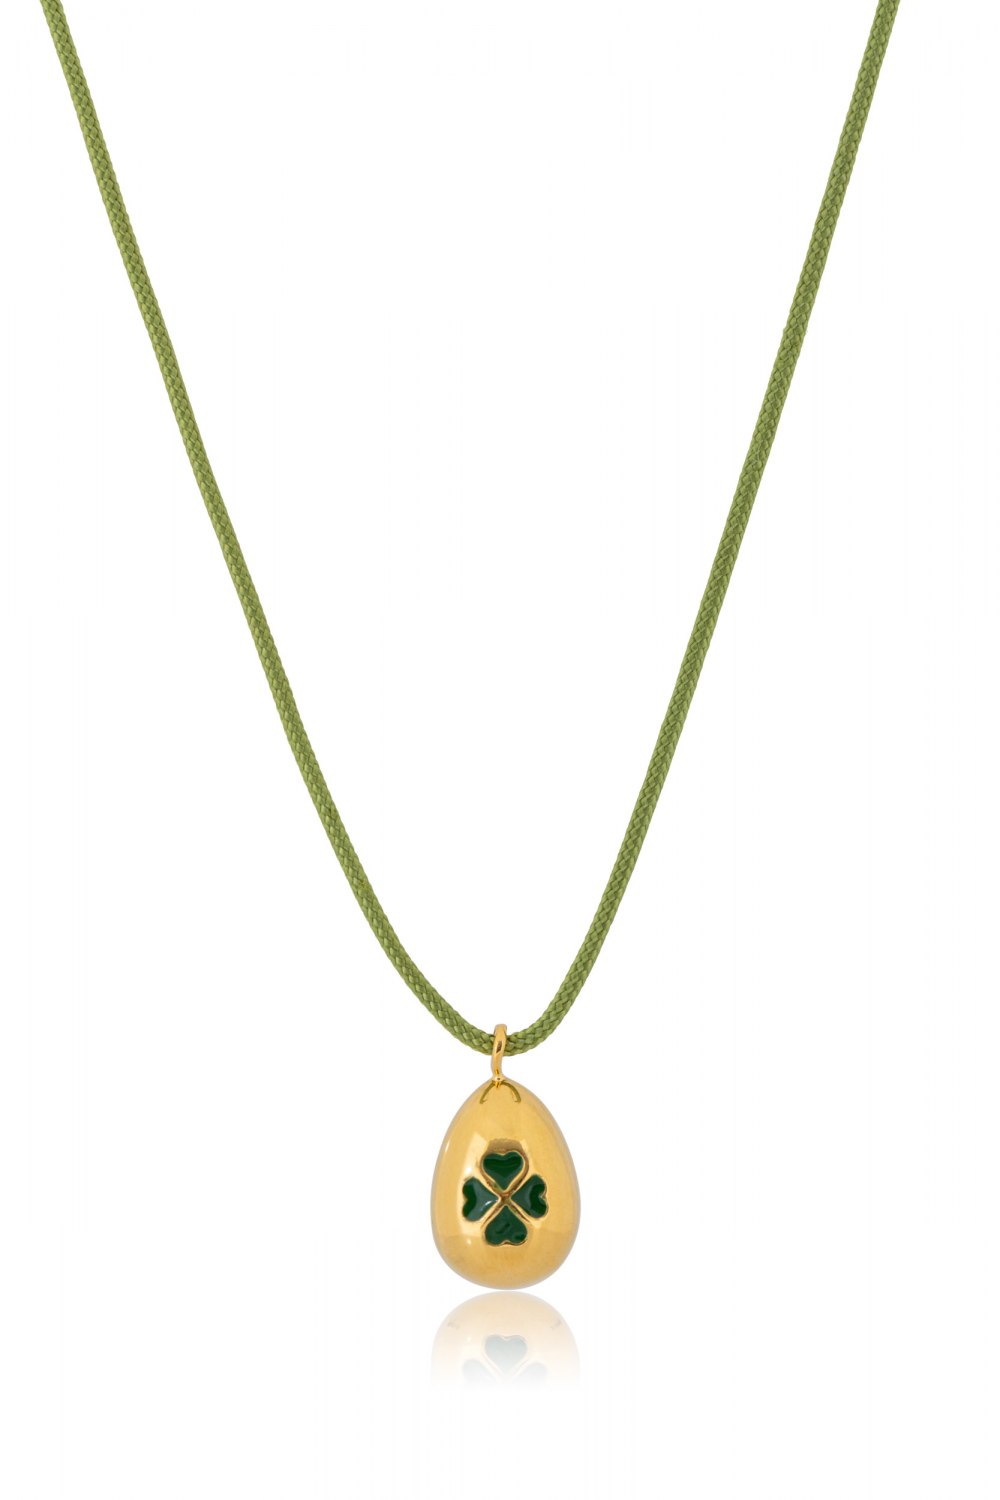 KESSARIS - Green Four-Leaf Clover Pendant Necklace